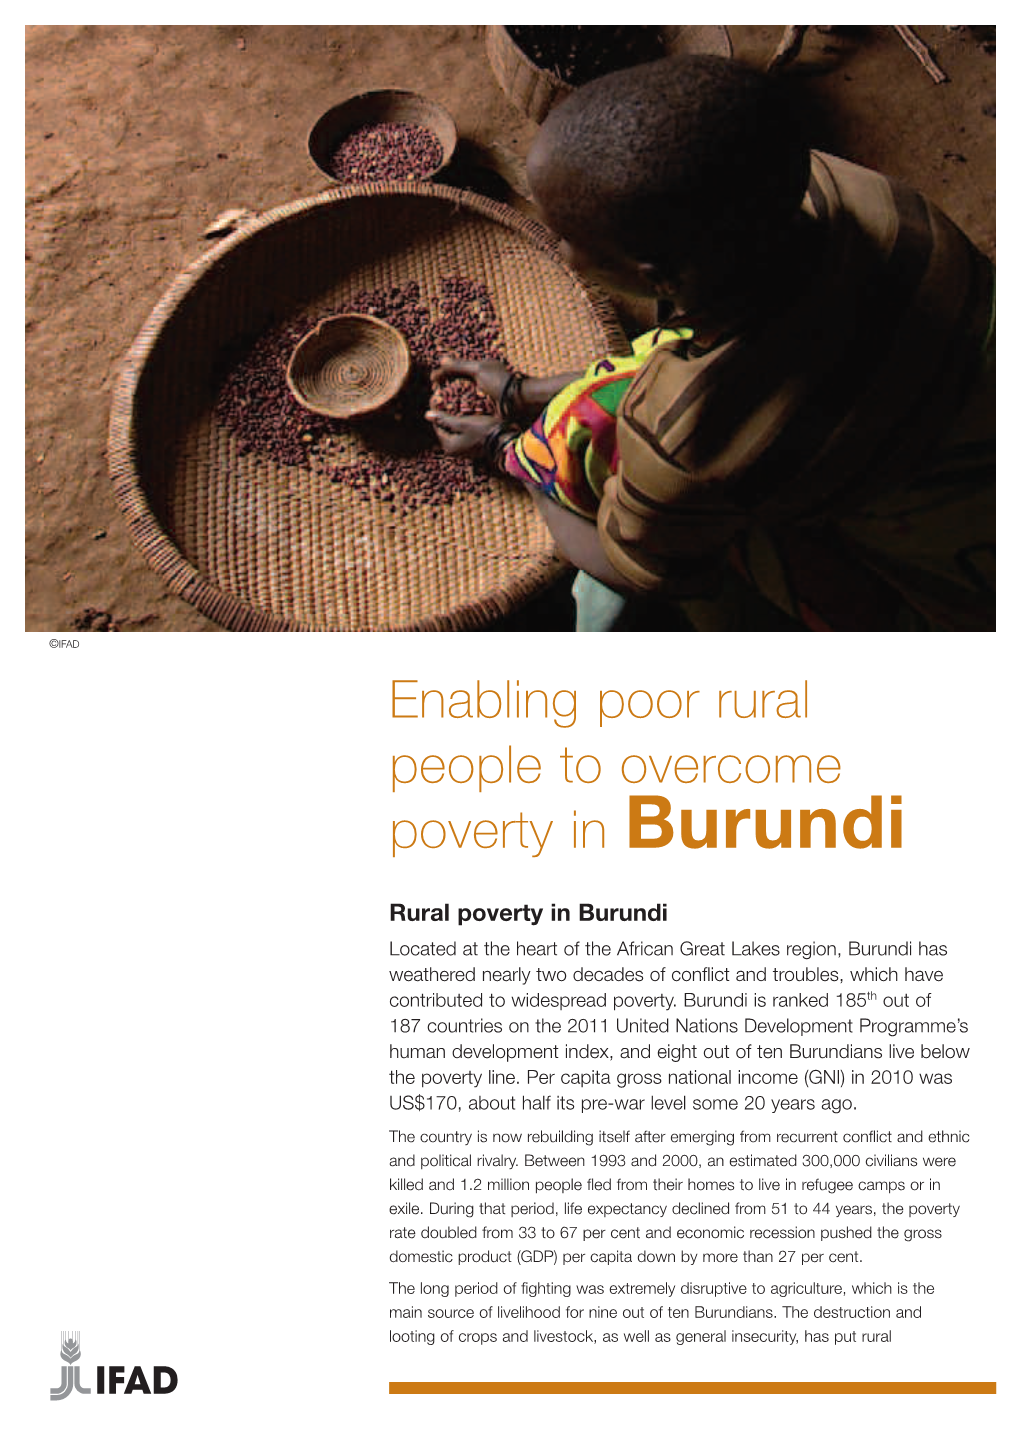 Enabling Poor Rural People to Overcome Poverty in Burundi